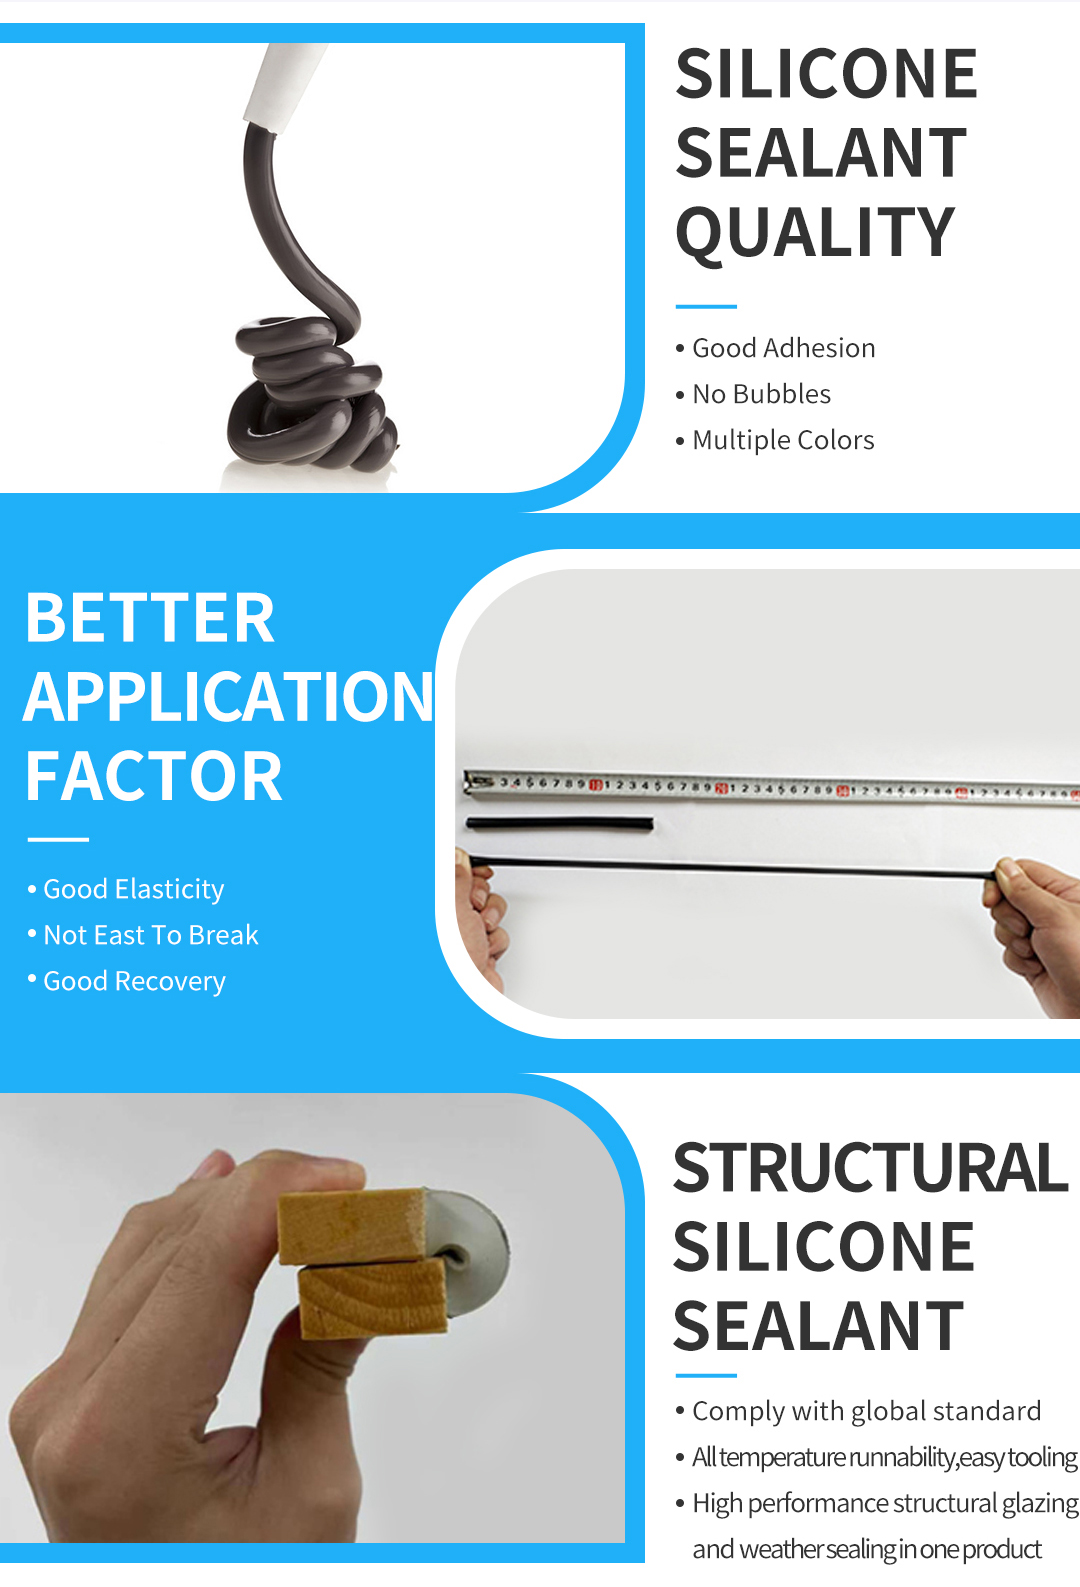 Structural Silicone Sealant